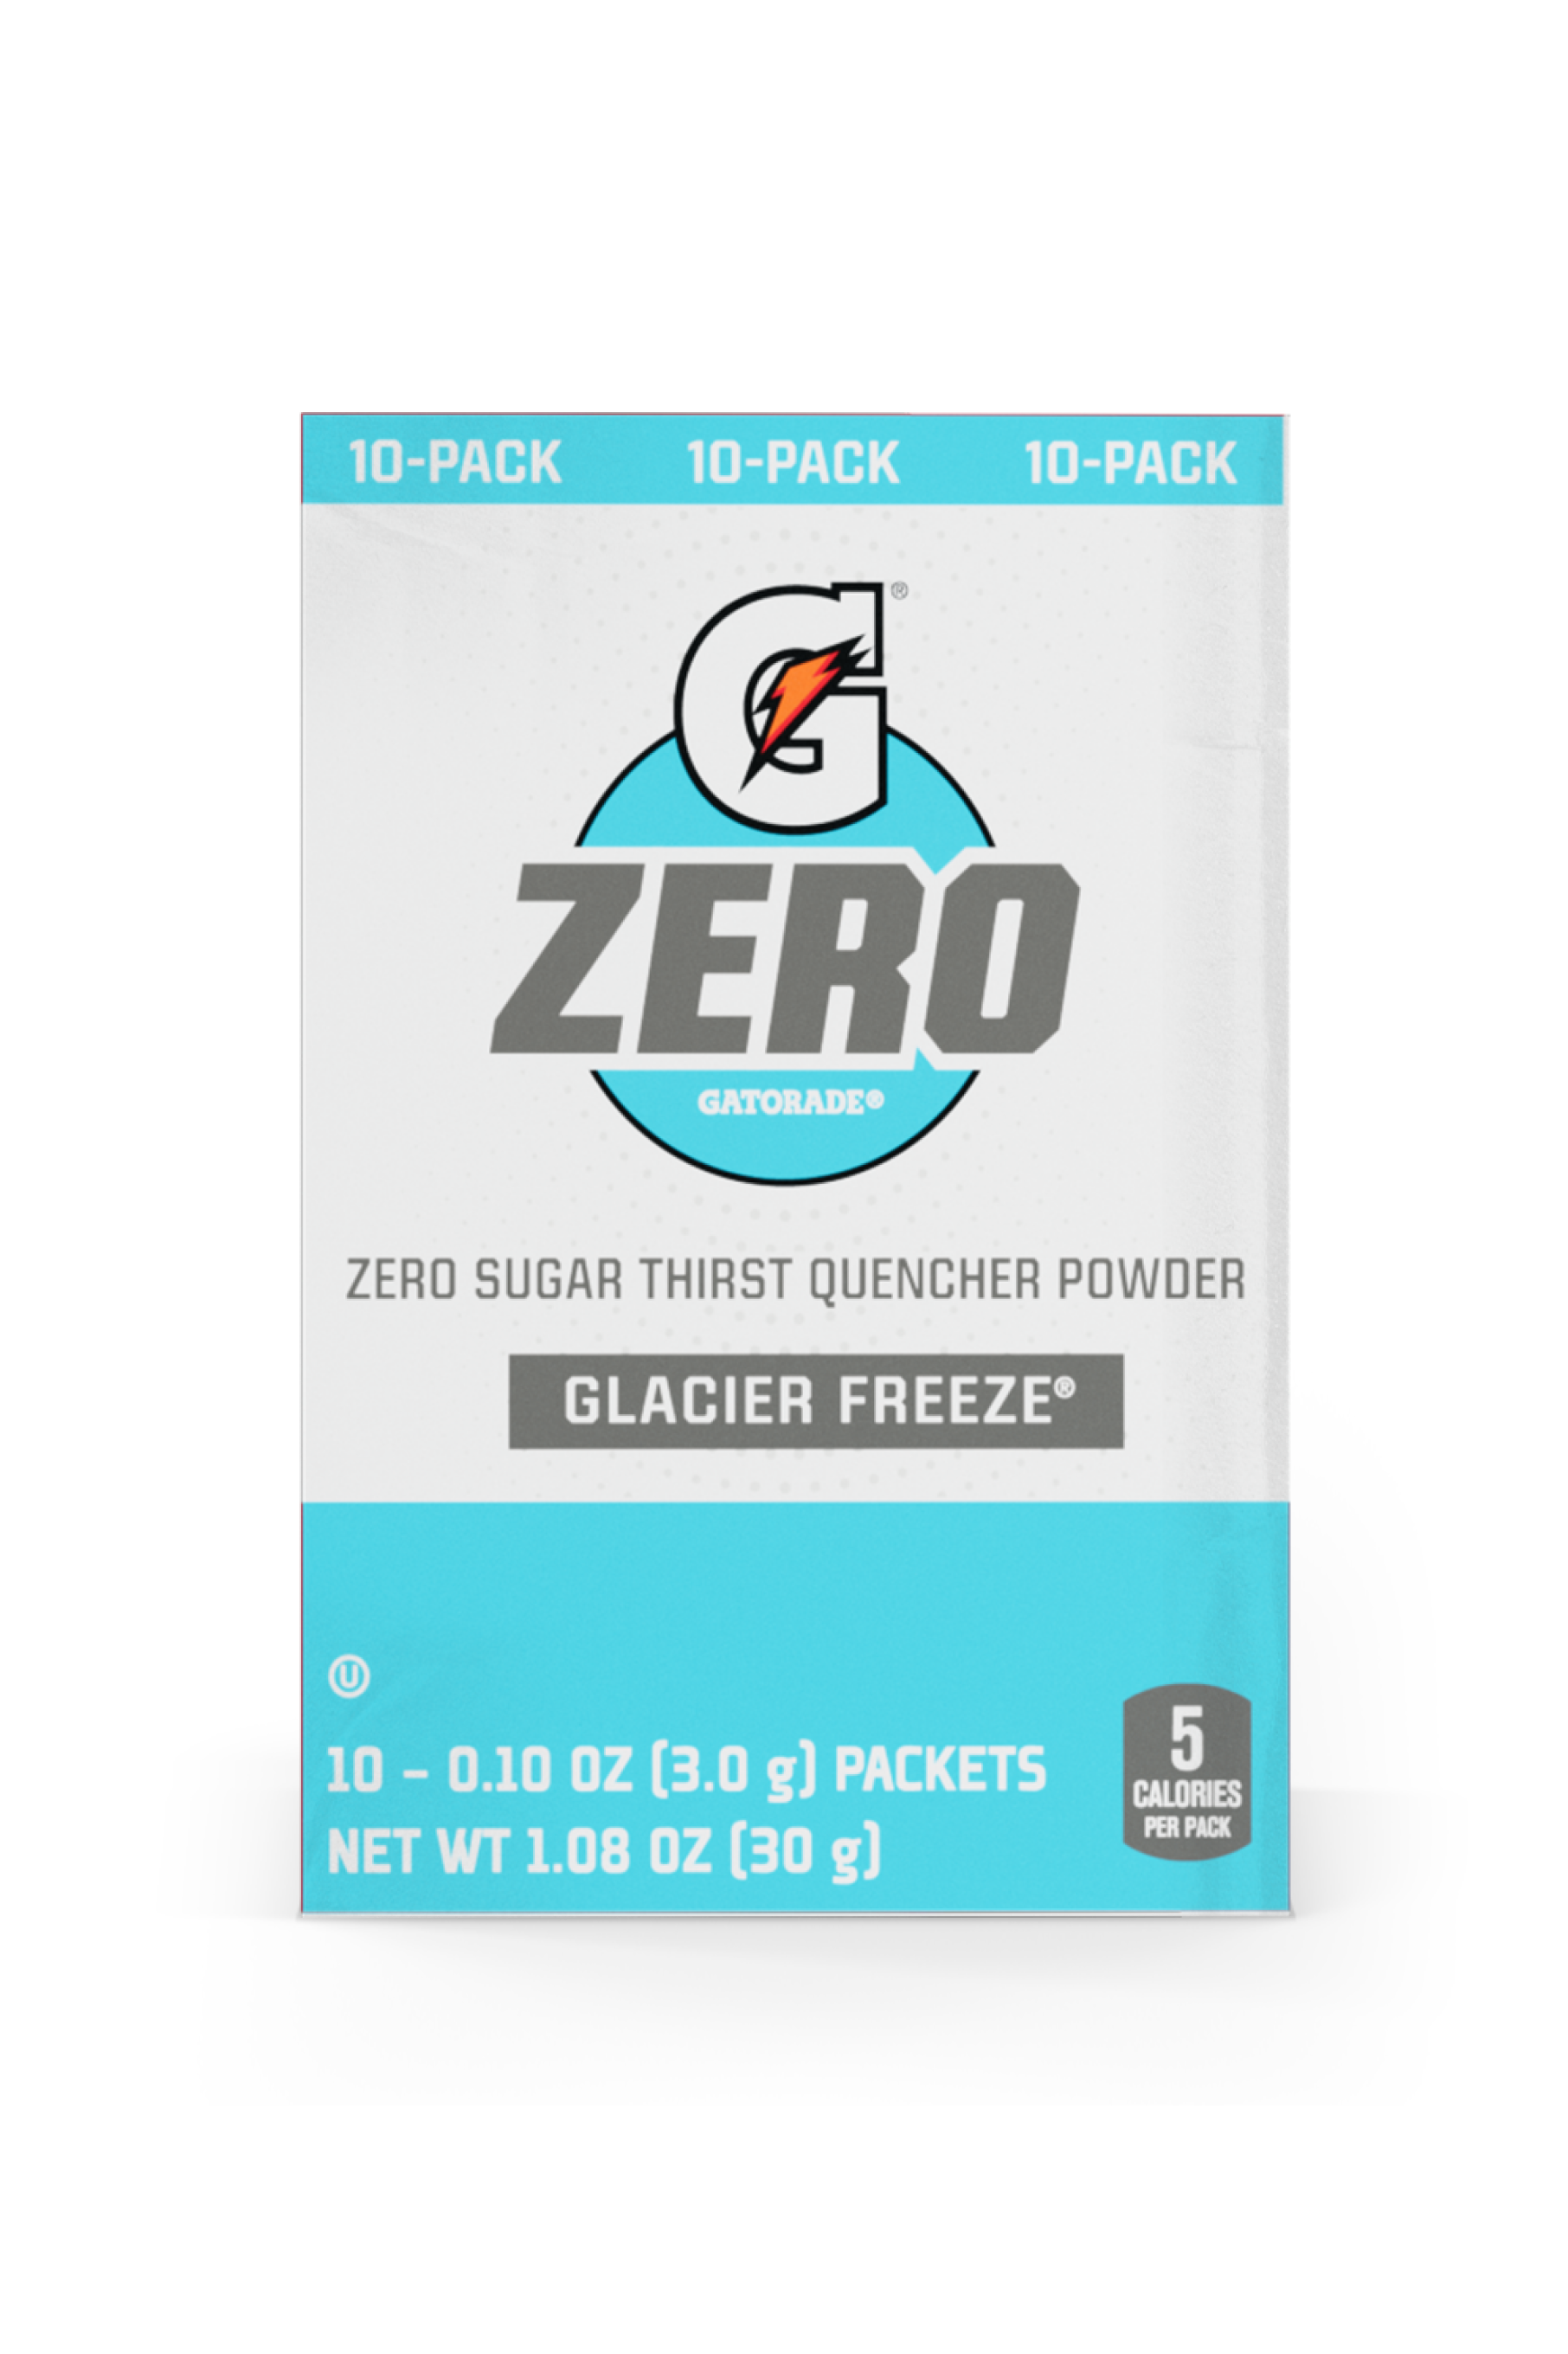 Gatorade zero glacier freeze 10 pack box